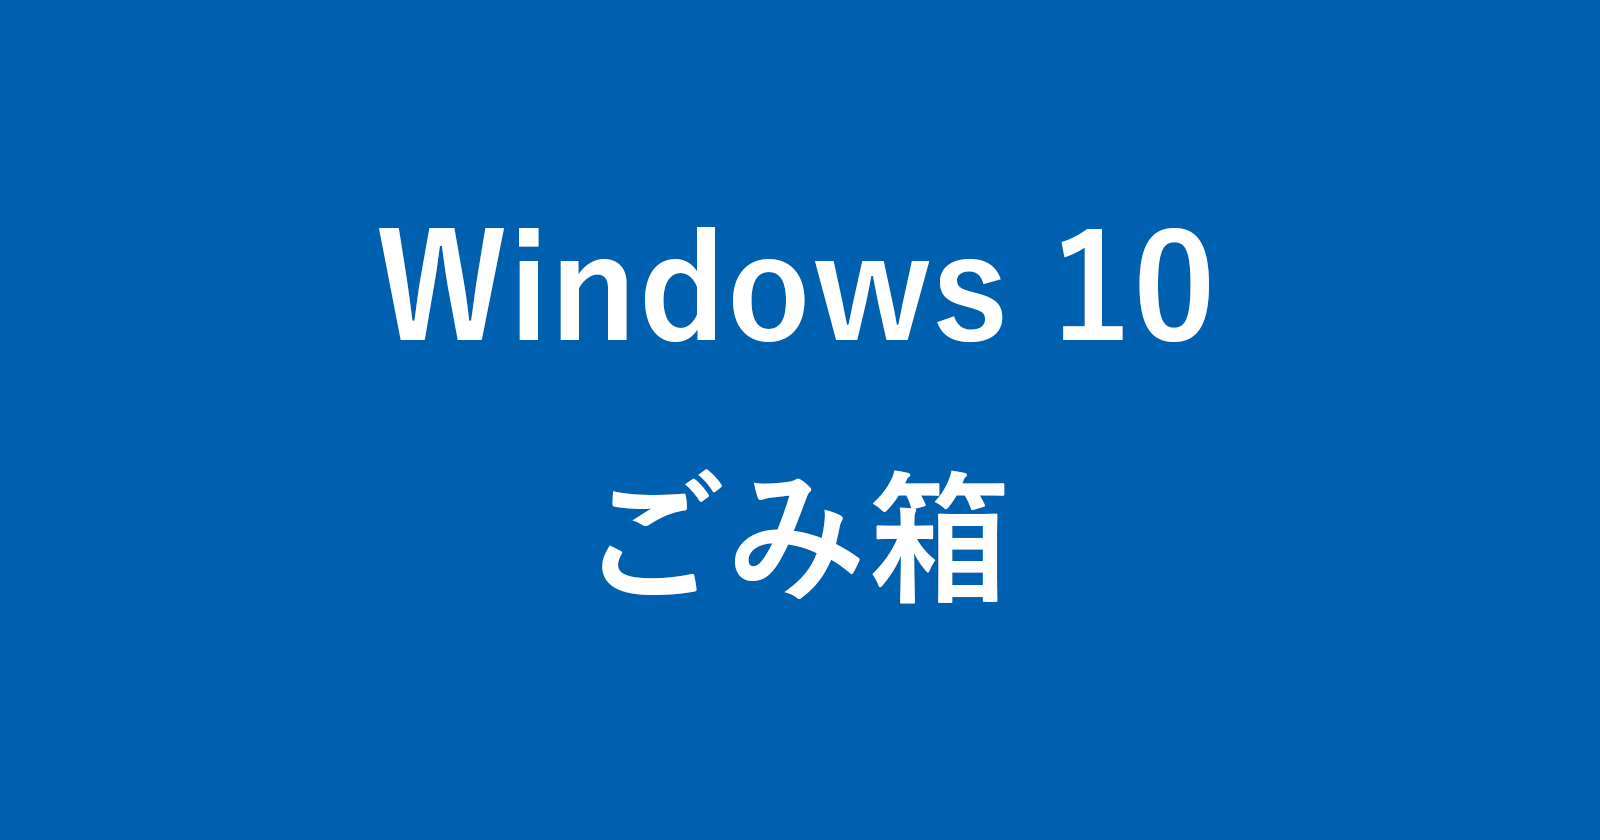 windows 10 recycle bin